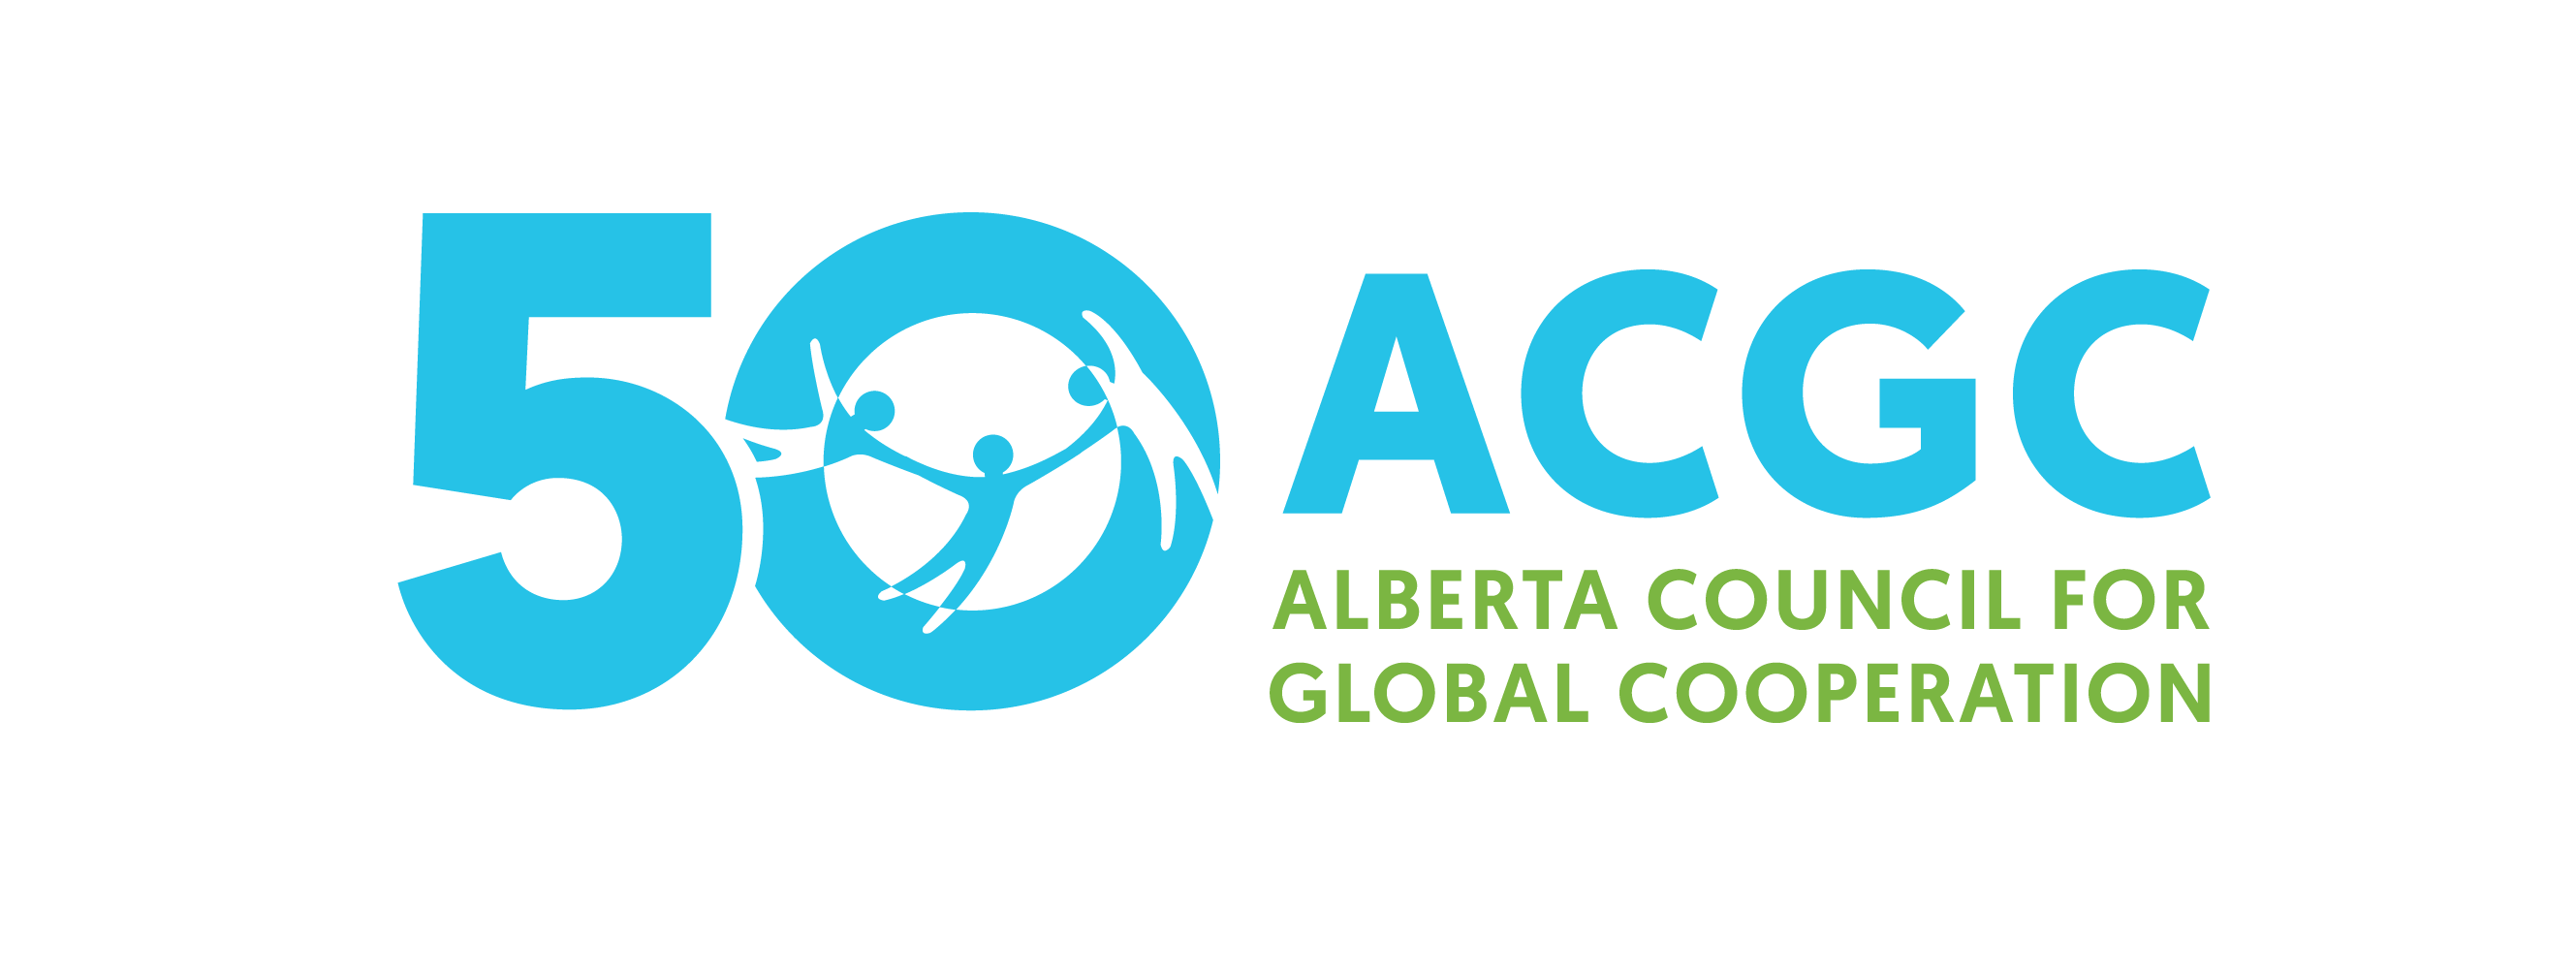 Executive Director, Alberta Council for Global Cooperation